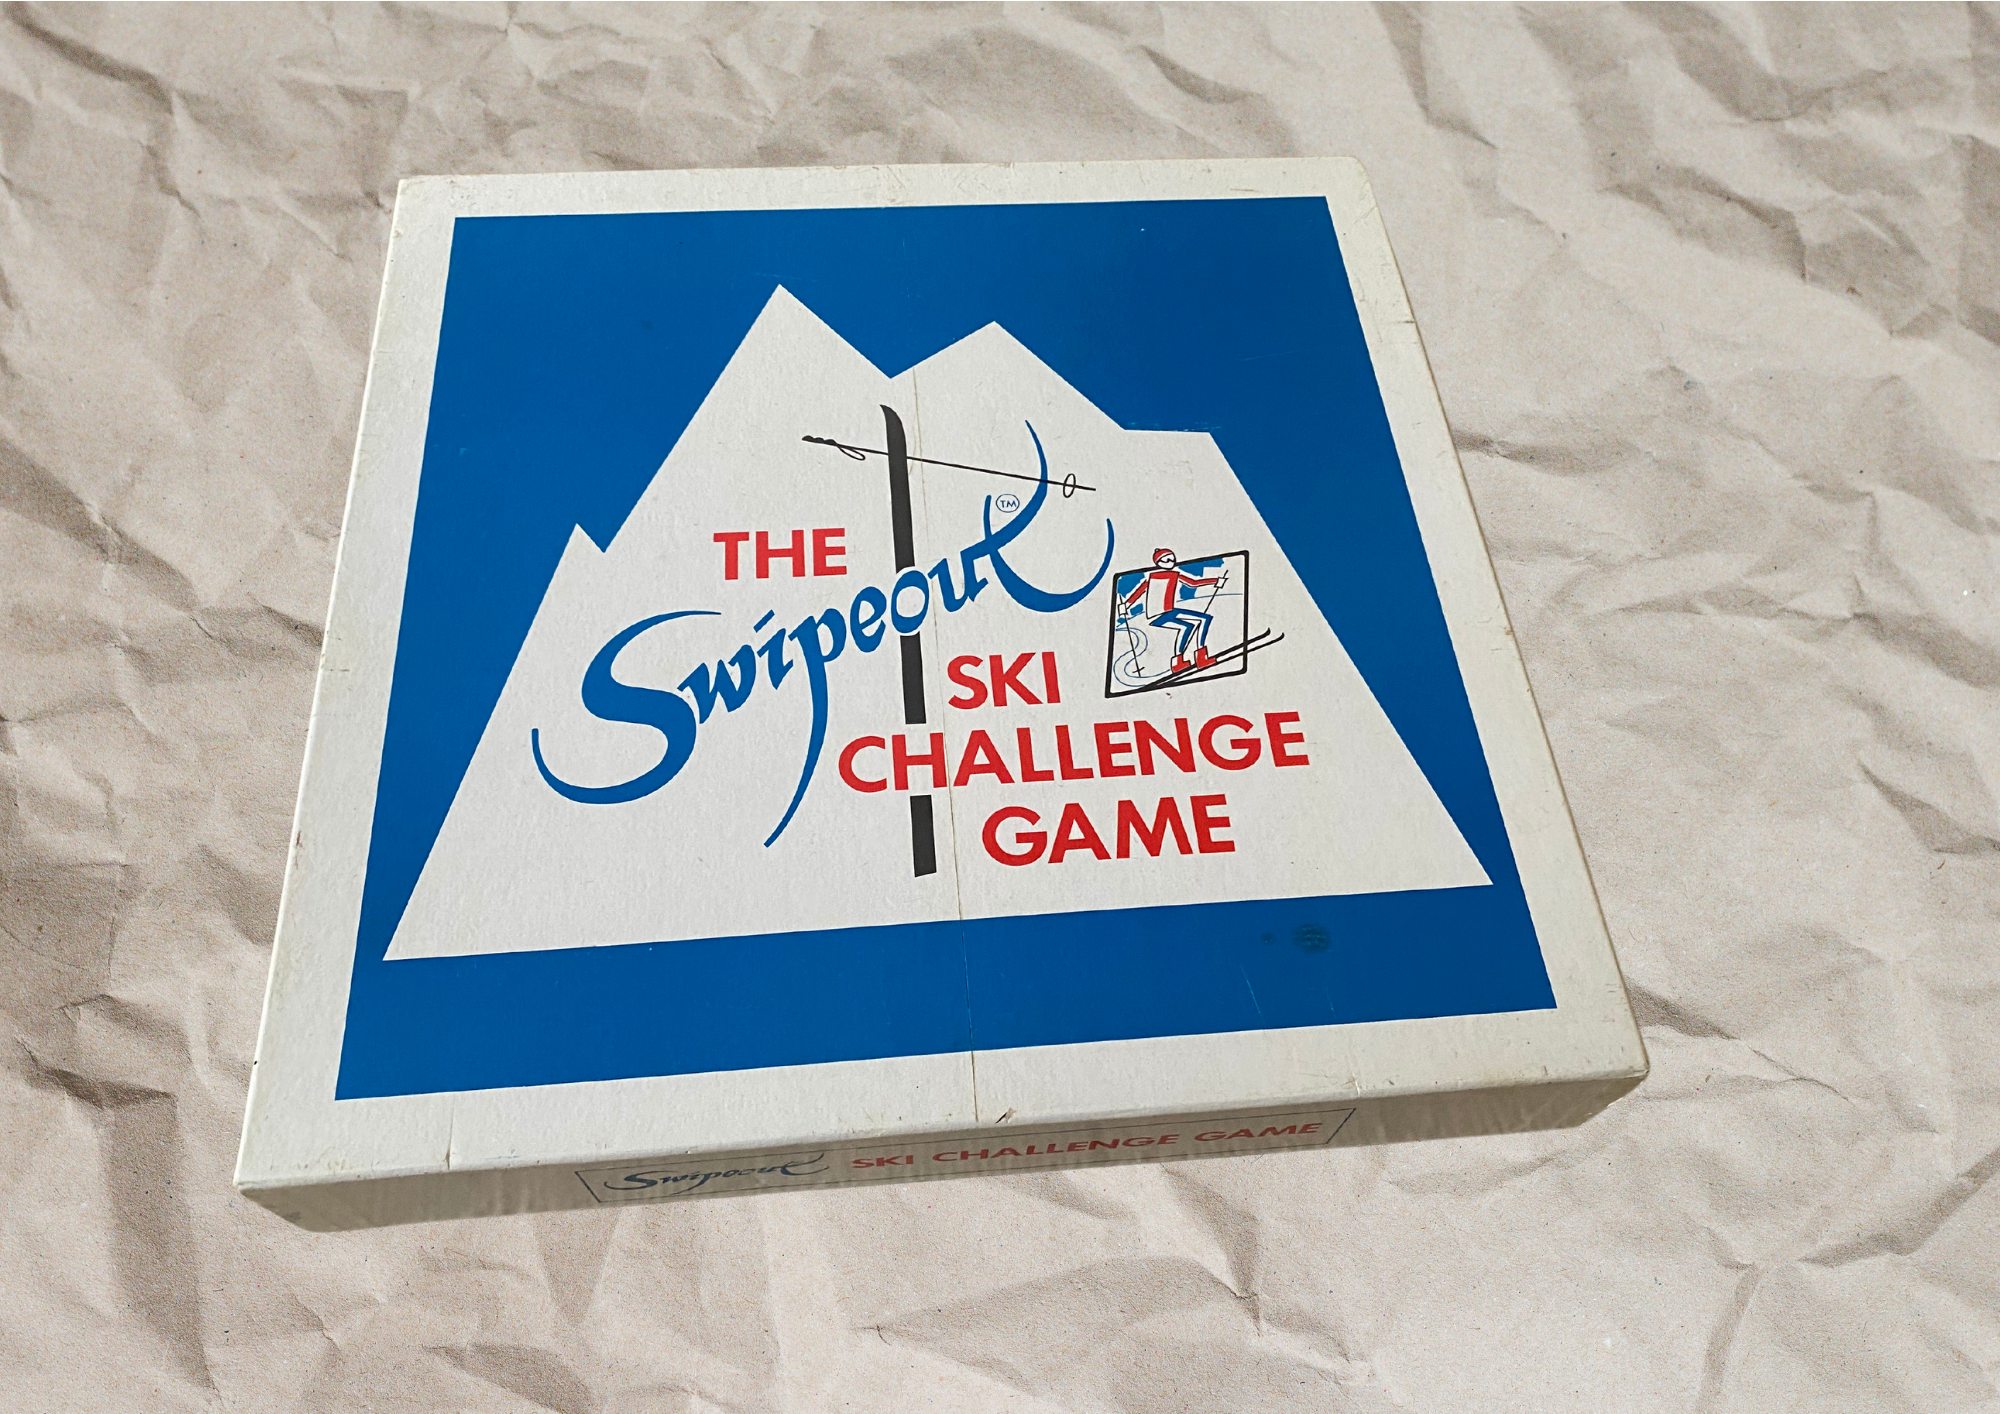 The Swipeout Ski Challenge Game